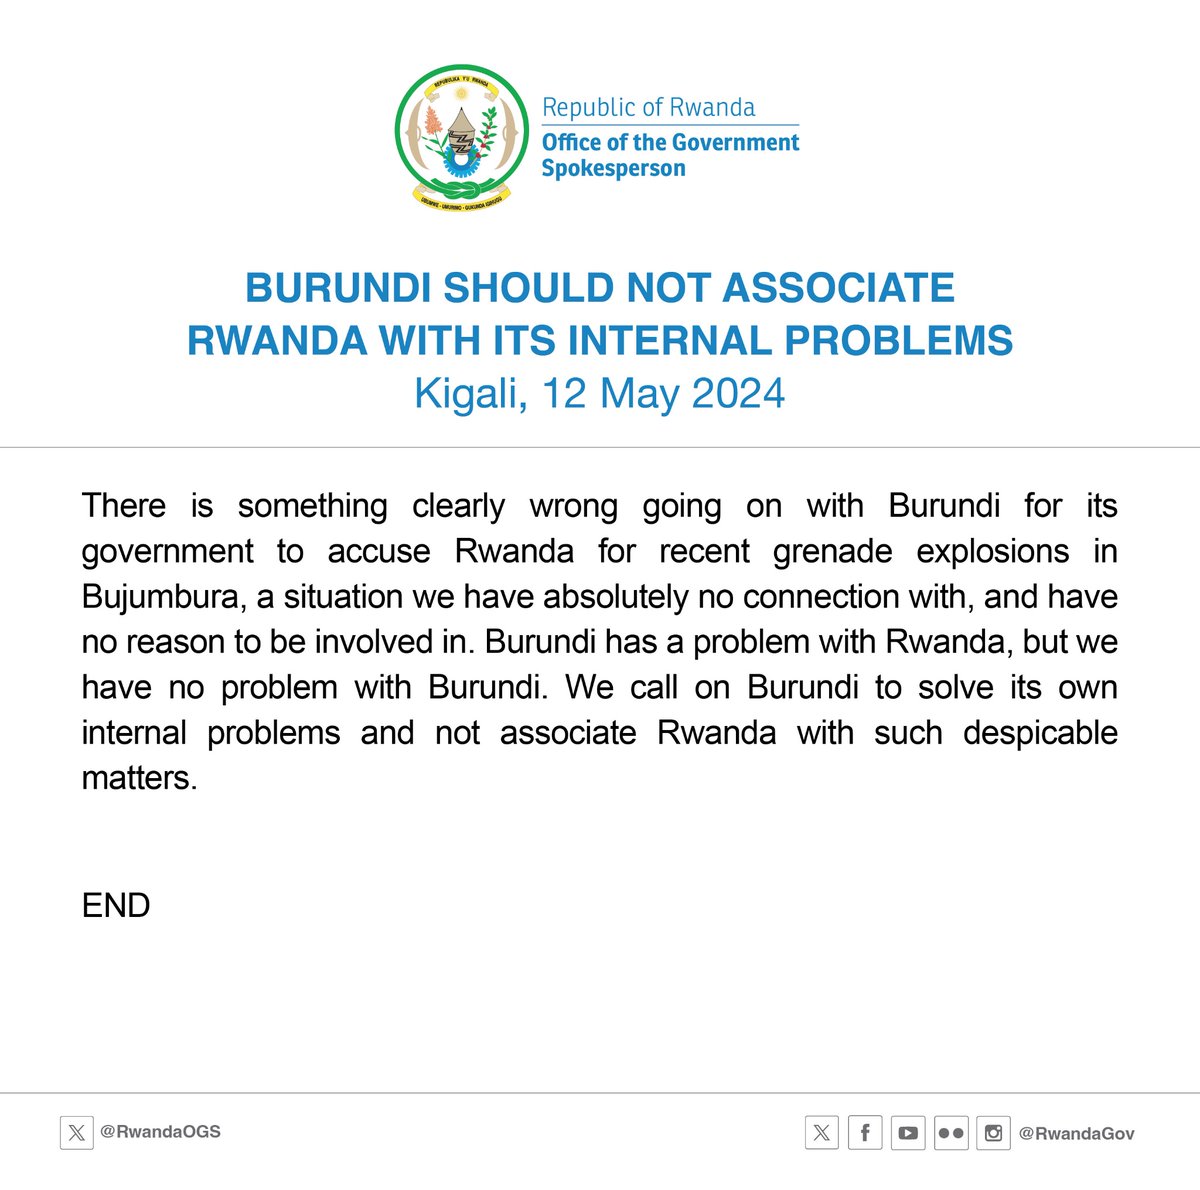 BURUNDI SHOULD NOT ASSOCIATE RWANDA WITH ITS INTERNAL PROBLEMS. Link: gov.rw/blog-detail/bu…